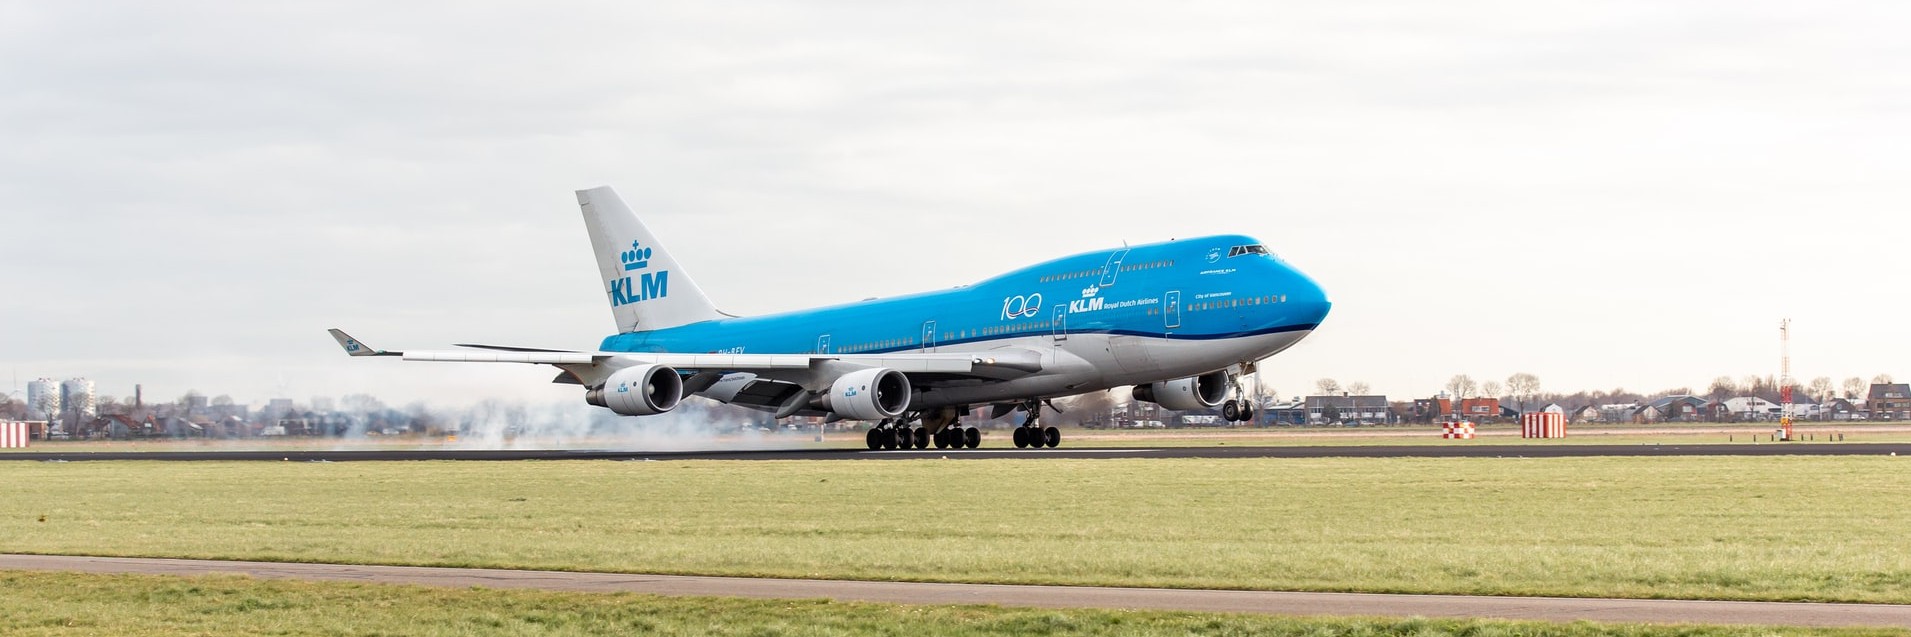 Blue Boeing 747-400 from KLM landing